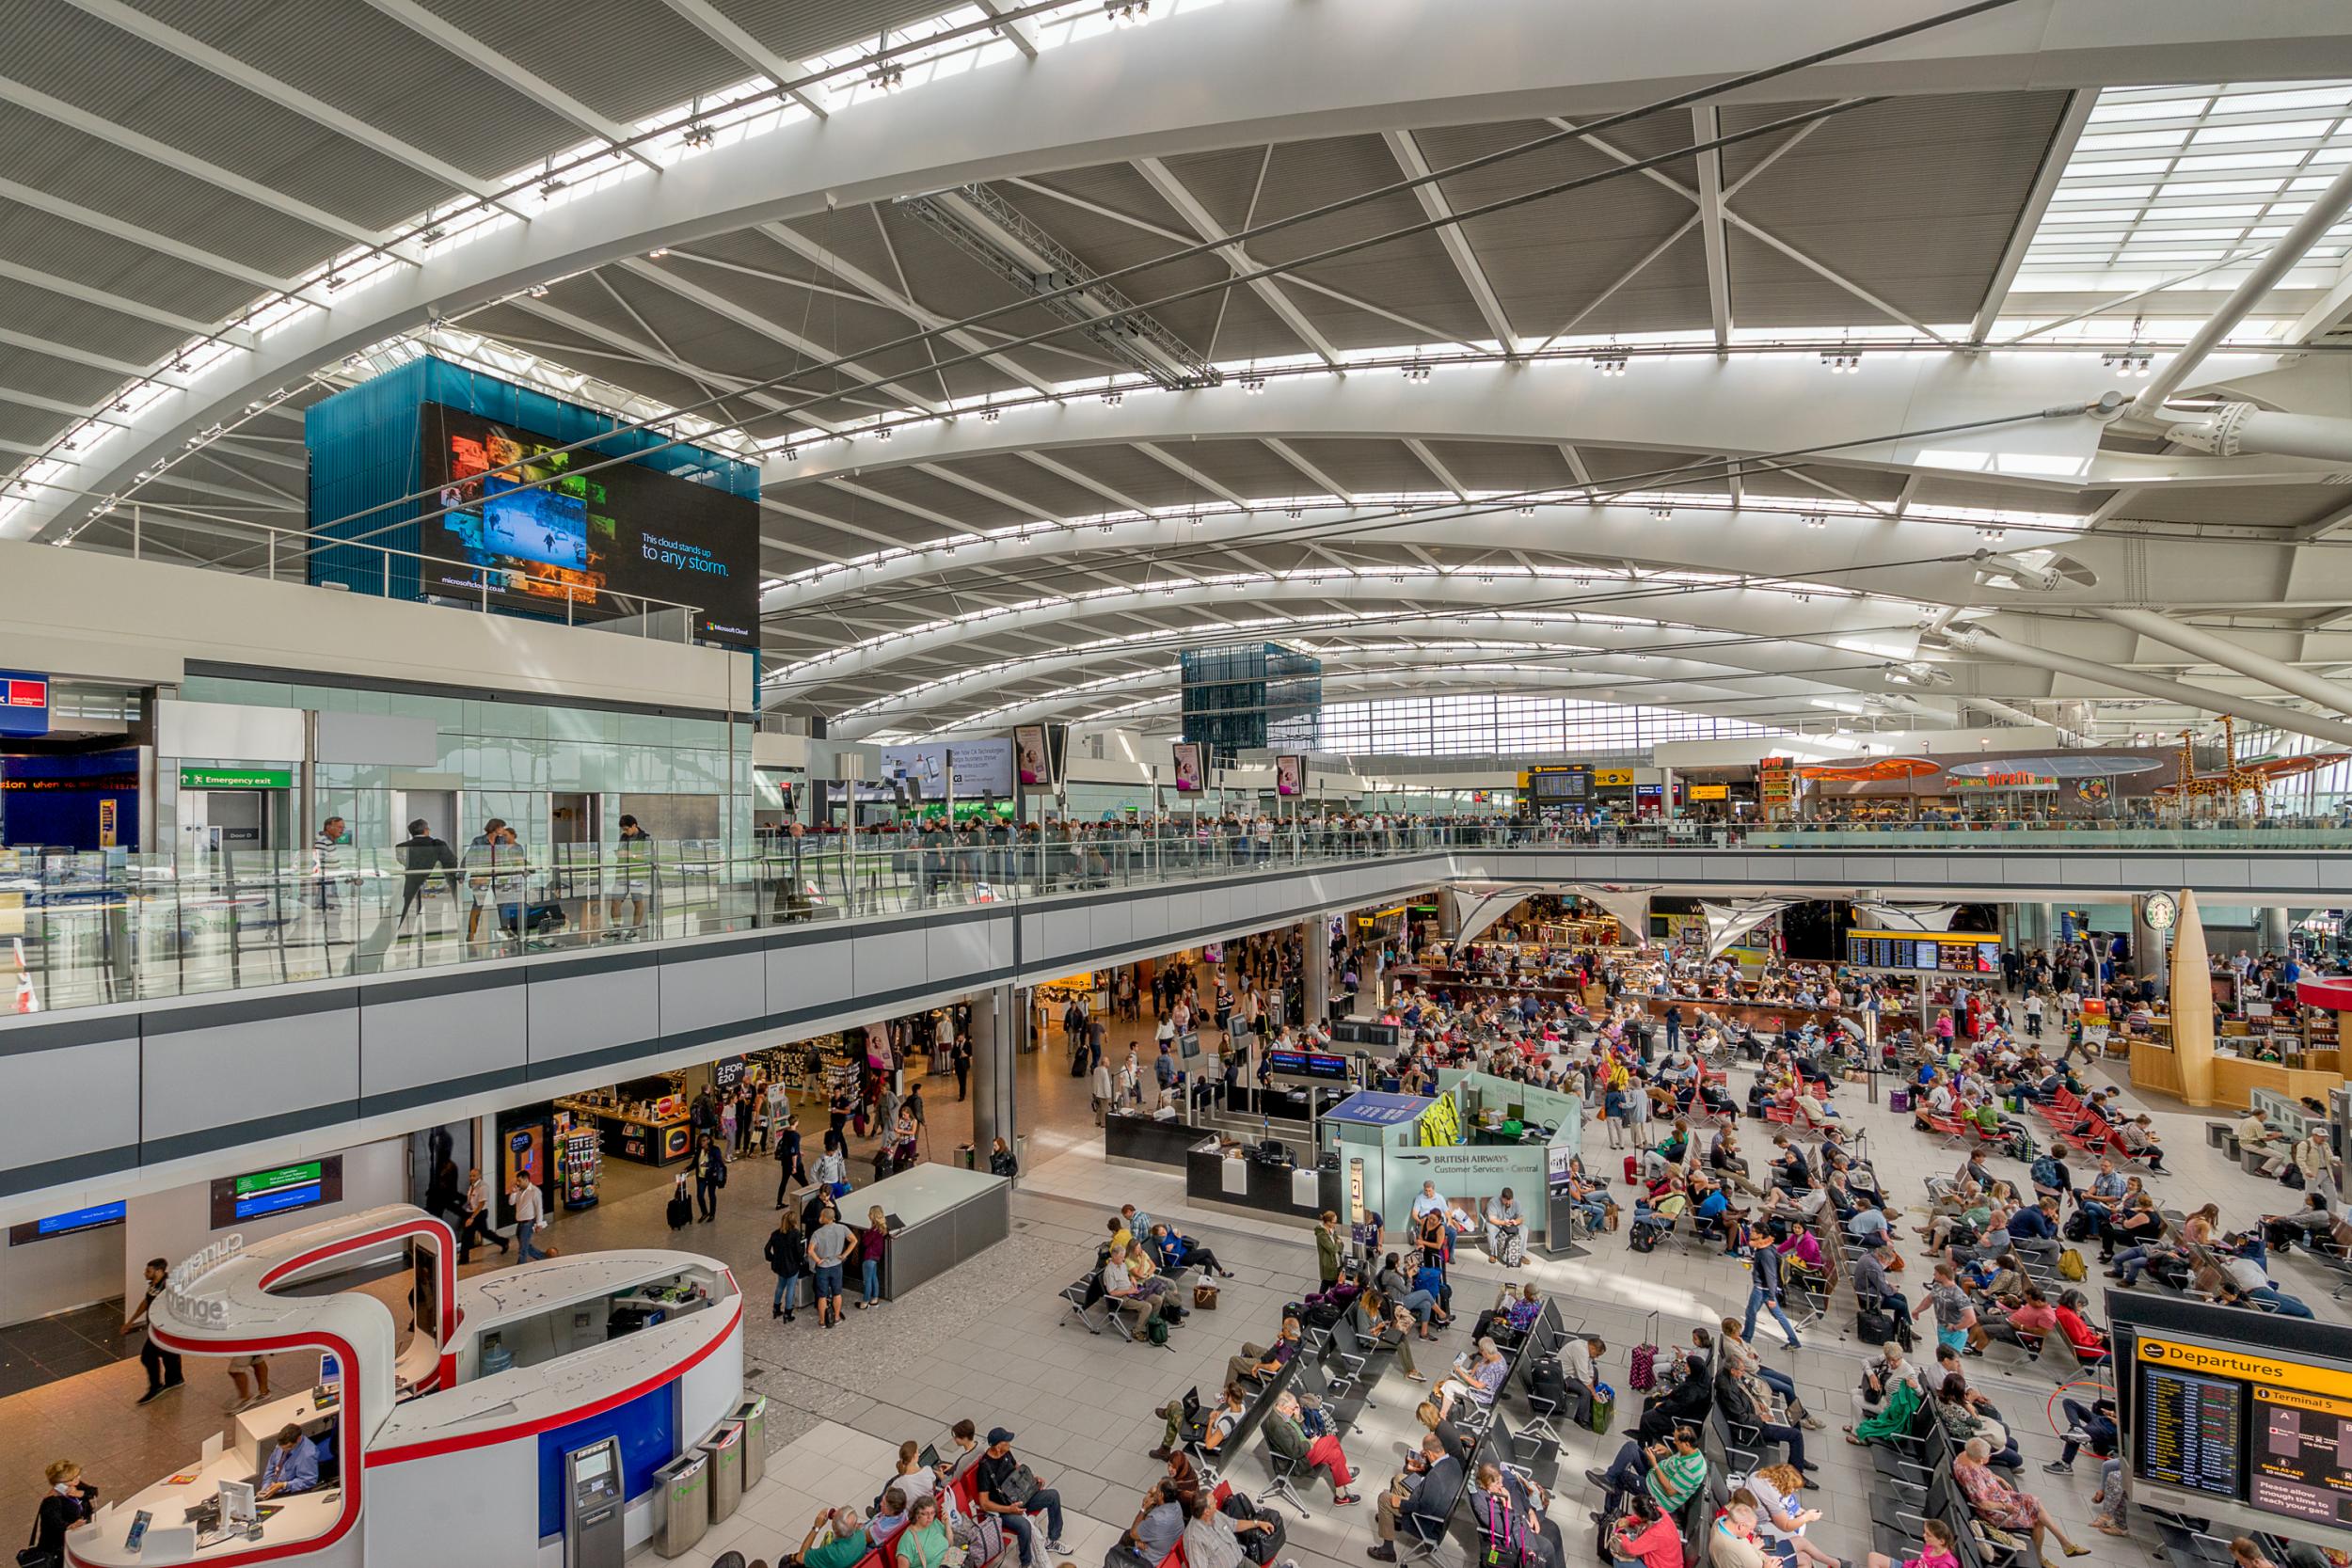 Heathrow's soaring Terminal 5